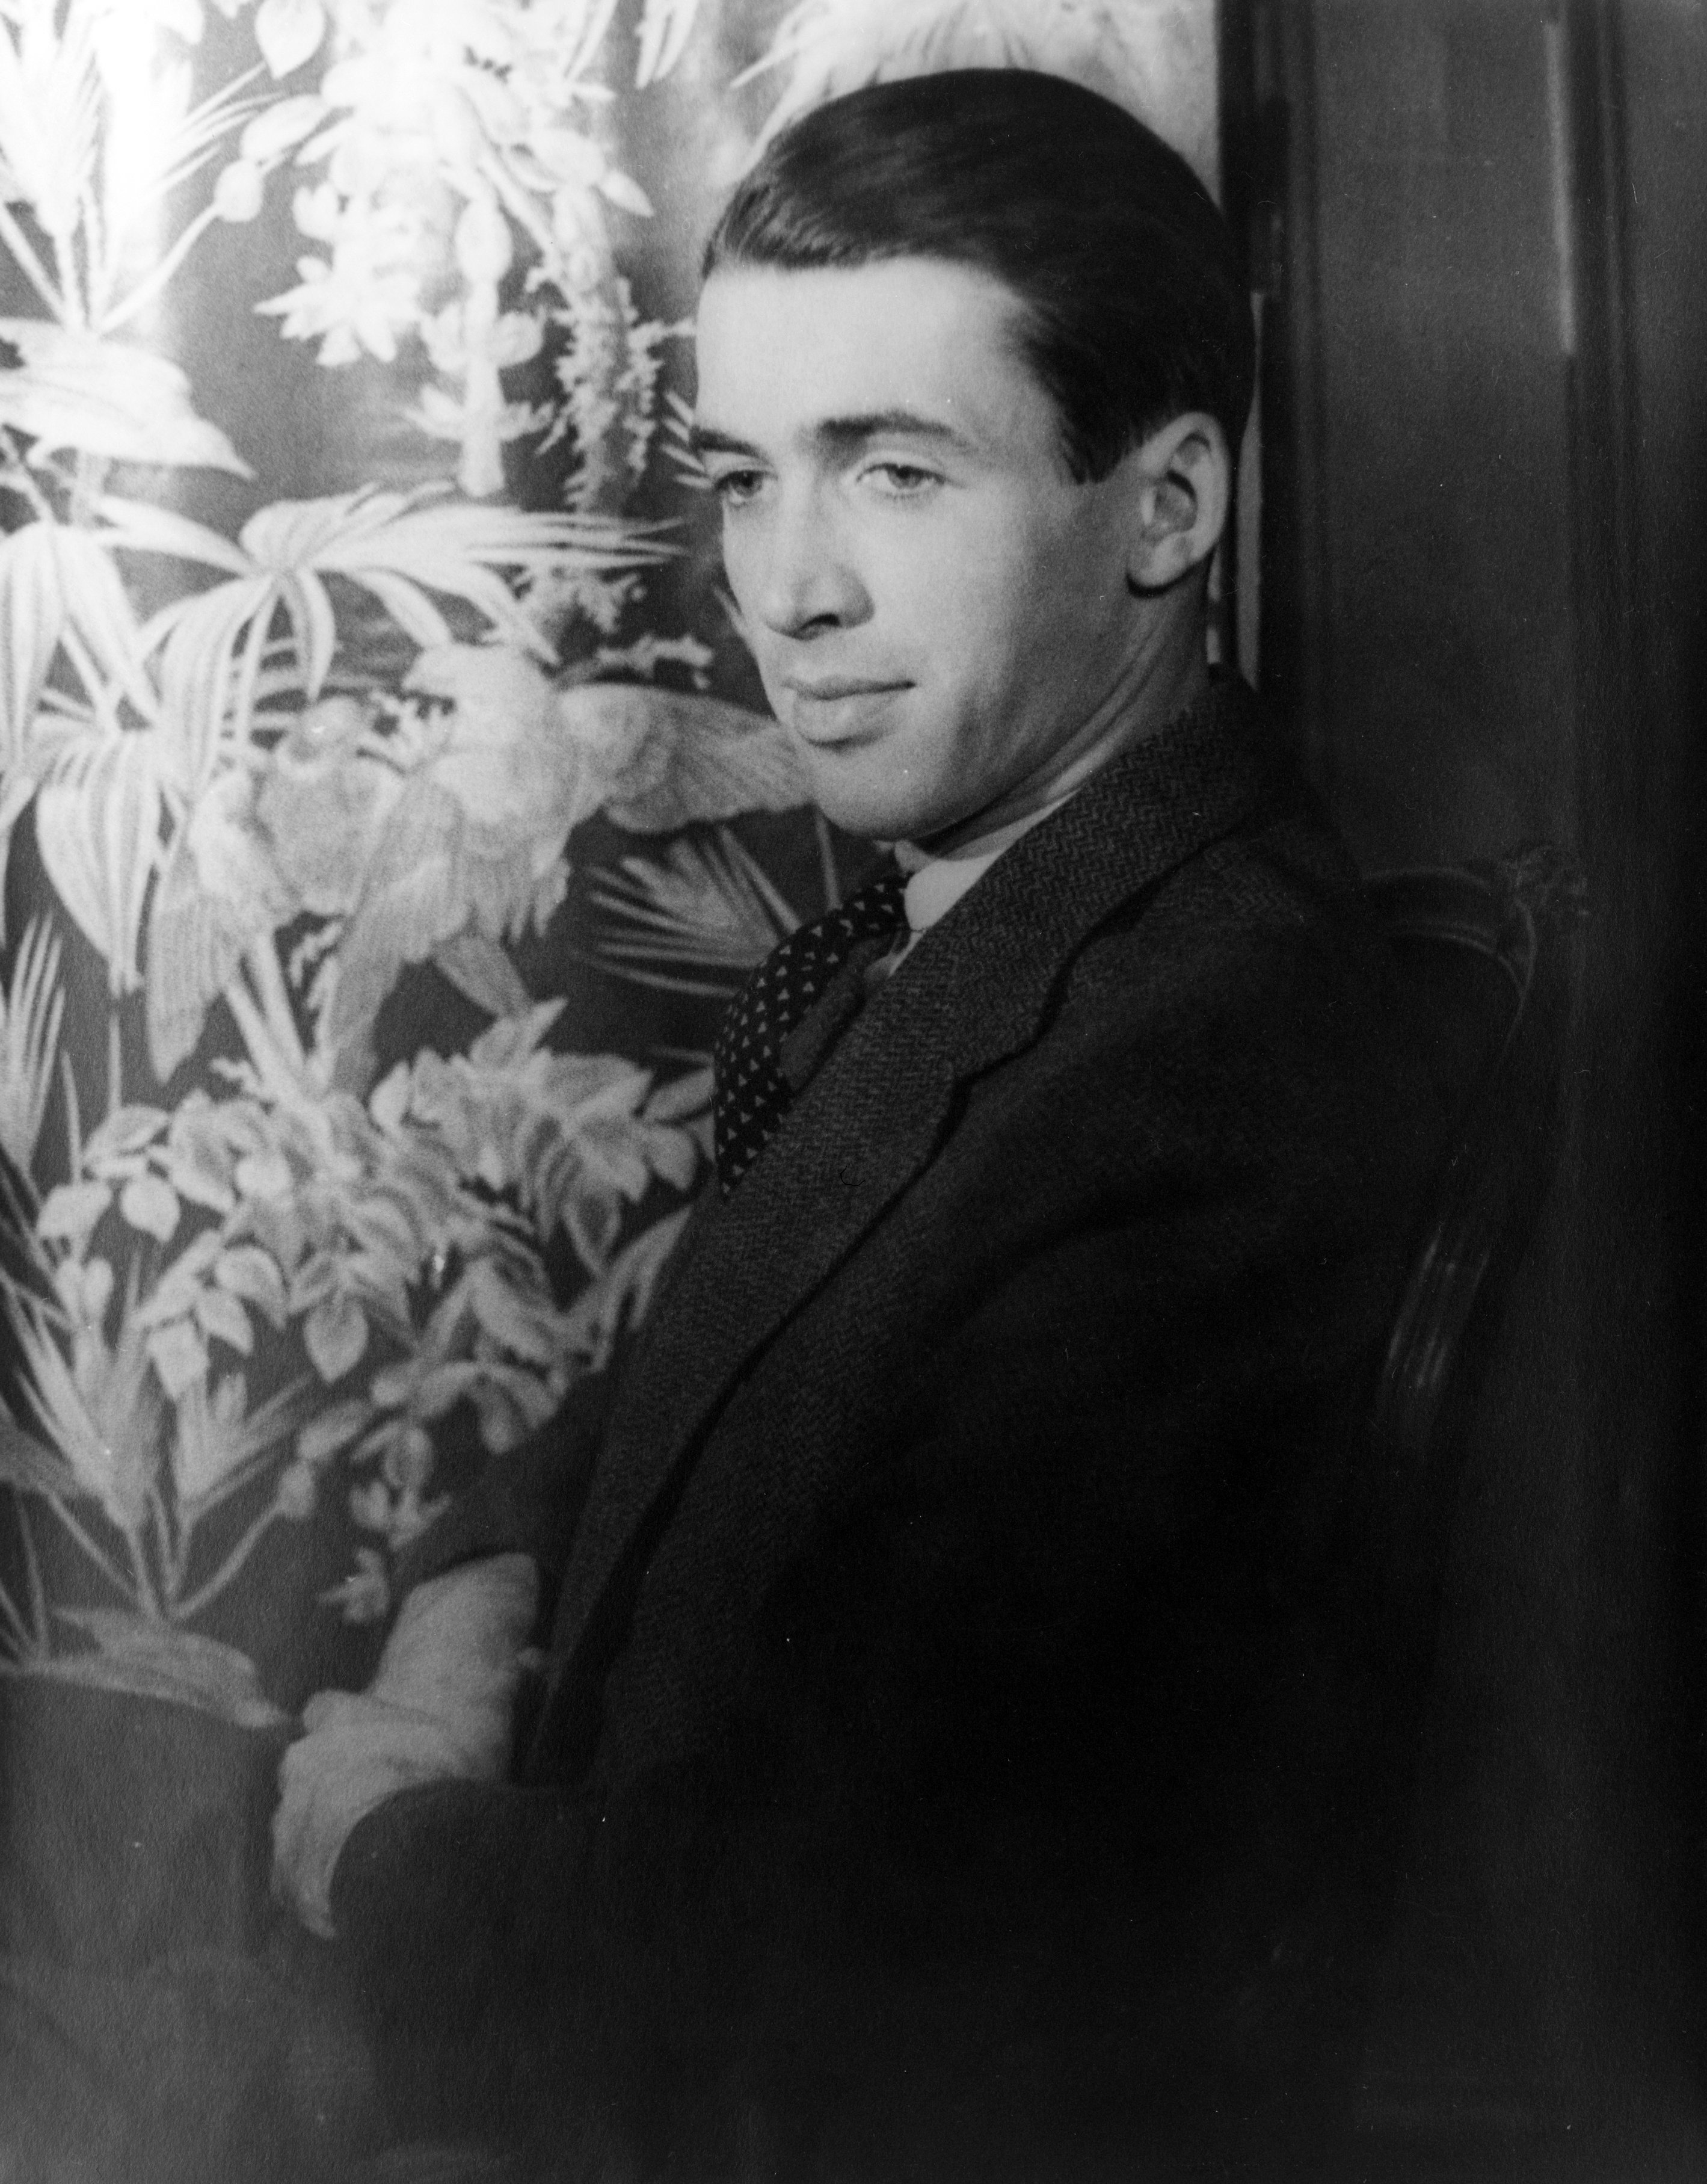 A portrait picture taken of Jimmy Stewart on 15 October 1934. | Source: Wikimedia Commons.